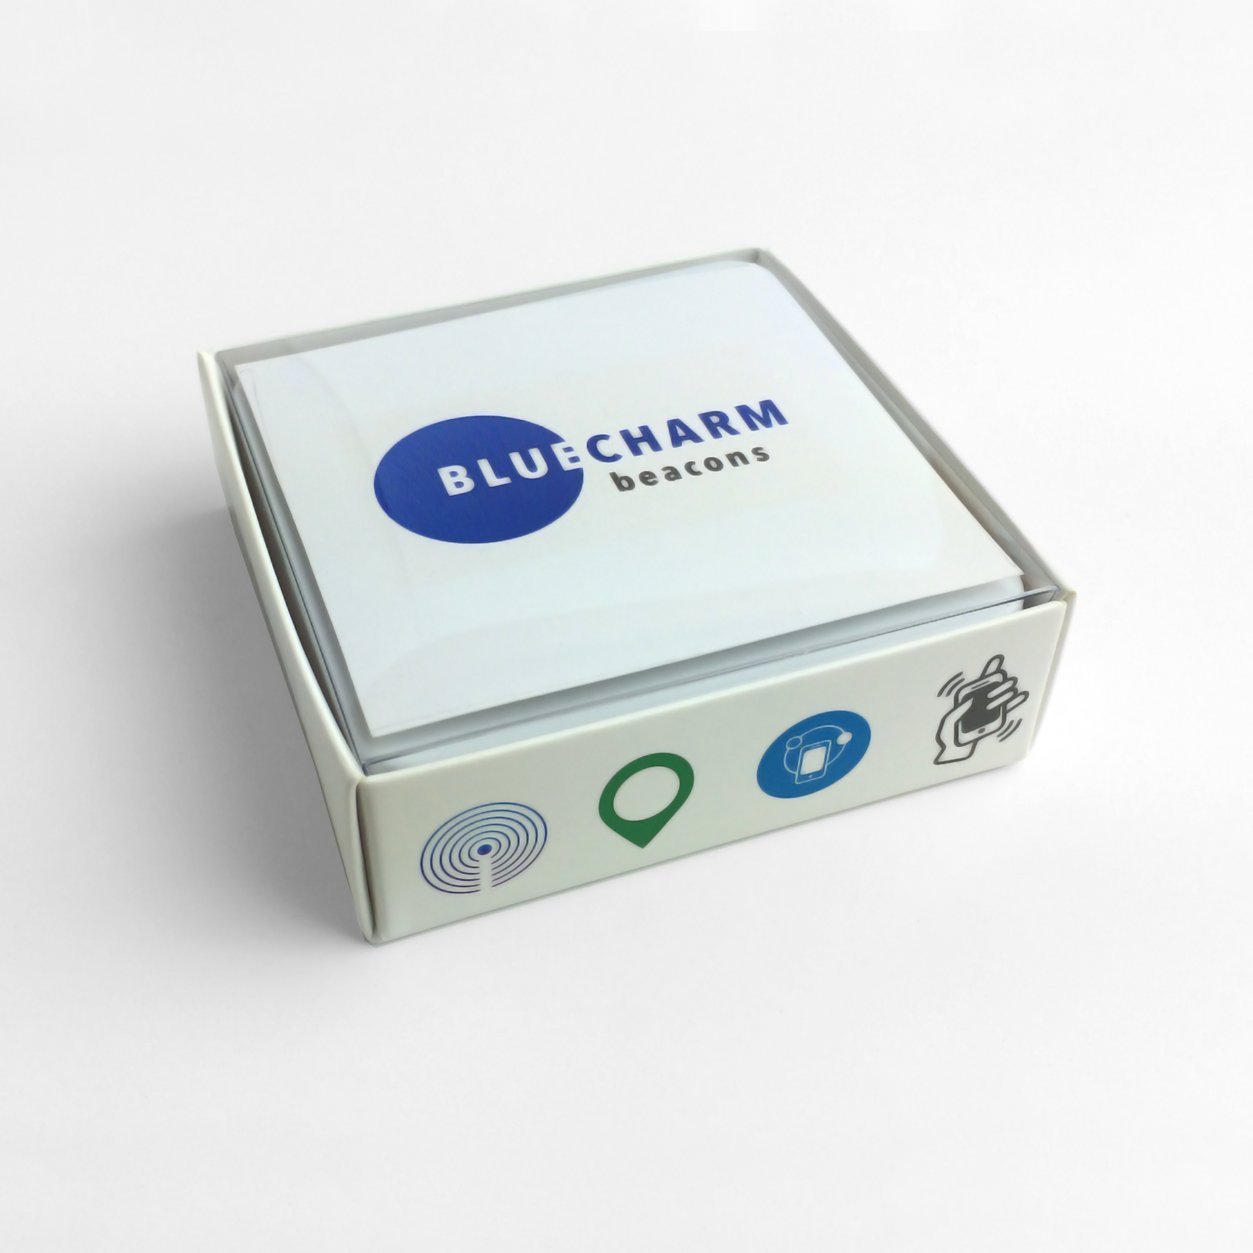 Blue Charm Beacons - Bluetooth BLE iBeacon (BC-U1-USB MultiBeacon) - USB Powered - Long Range BLE 5.0